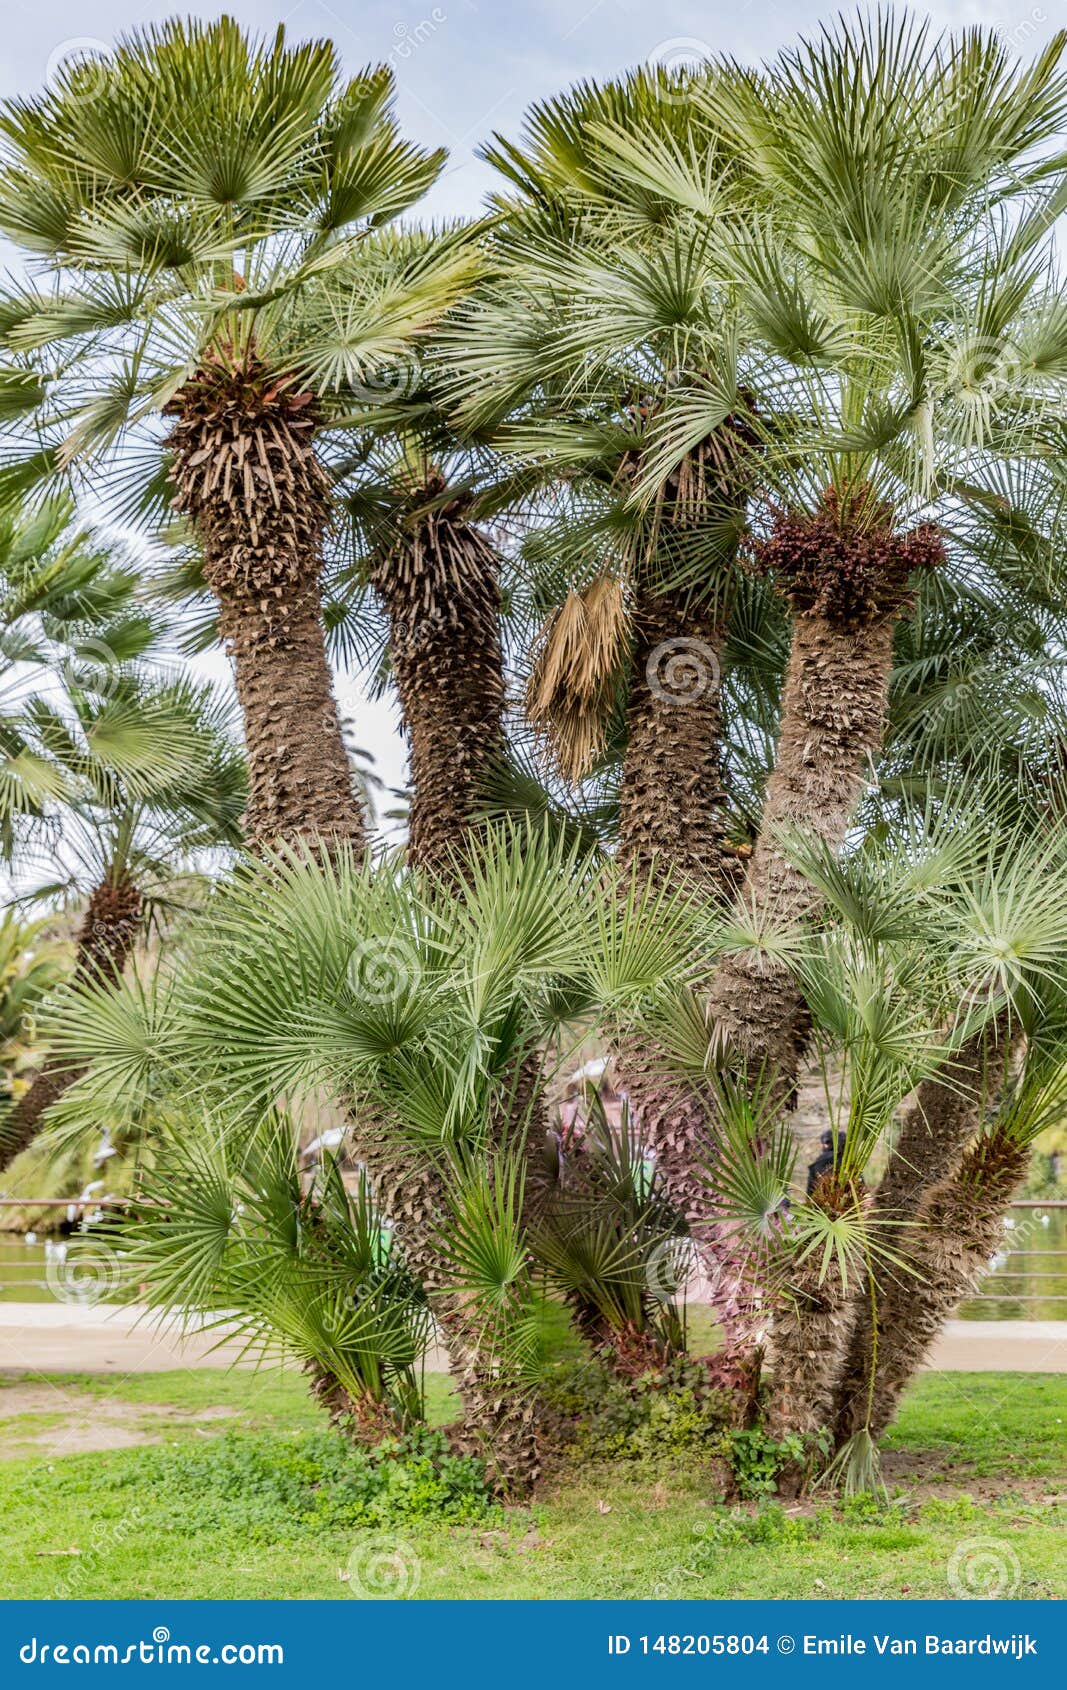 beautiful palm tree known as palmito or dwarf palmera chamaerops humilis with thick trunks and irregular 